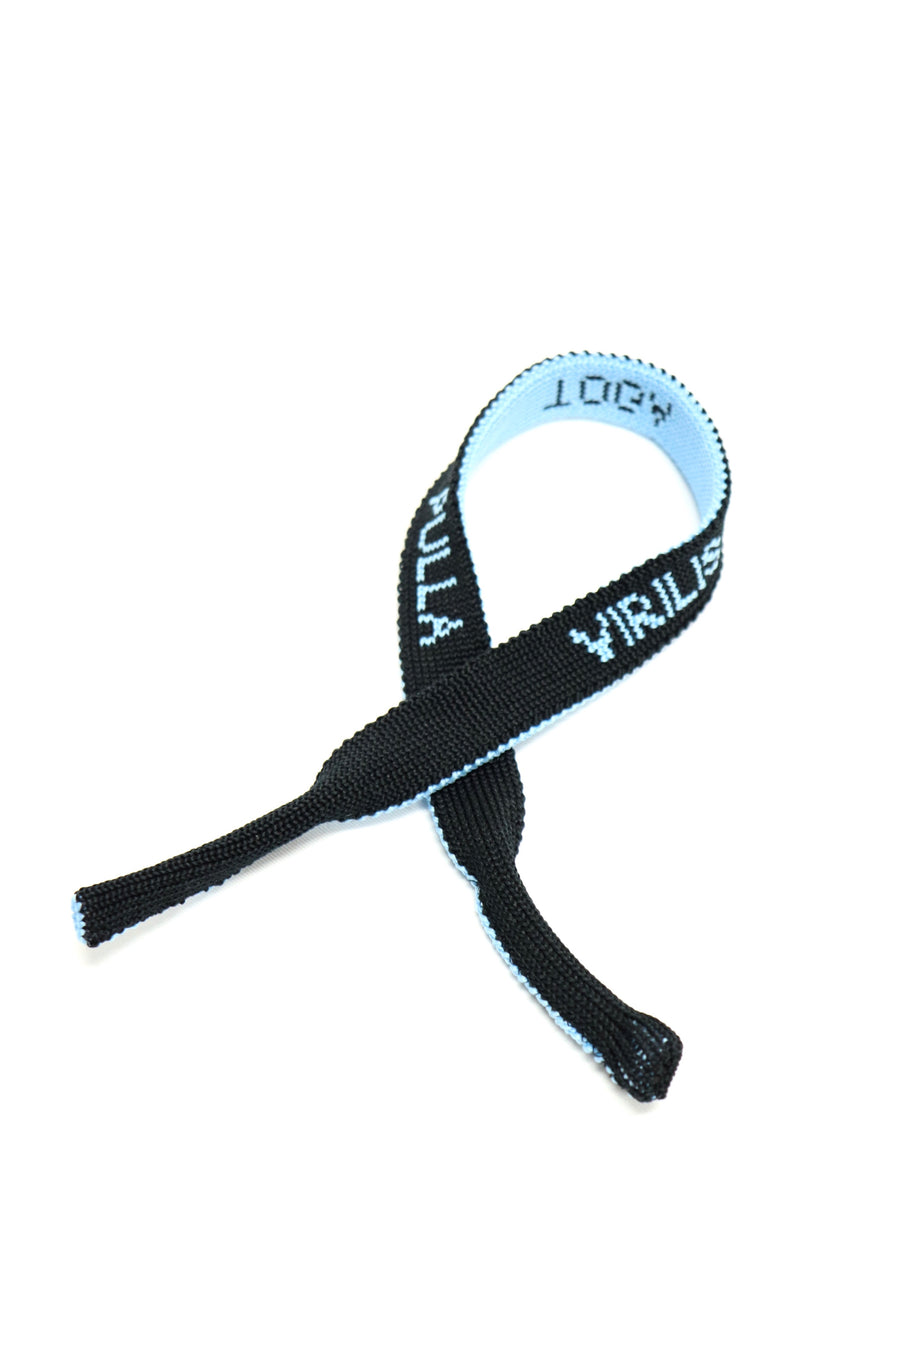 TOGA VIRILIS  Knitted glass holder(L.BLUE)